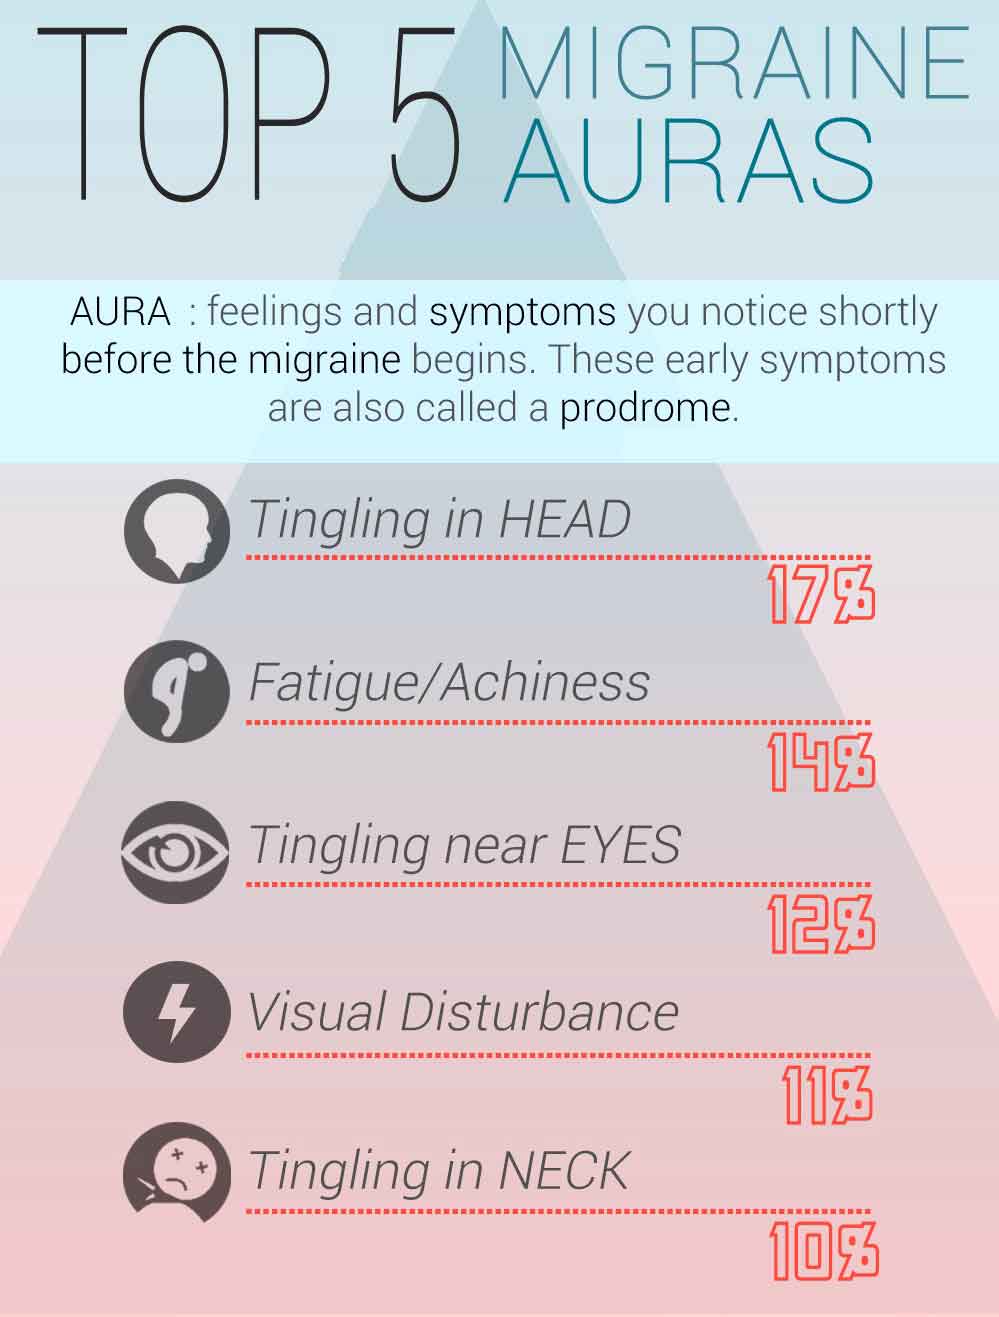 Top 5 Migraine Auras